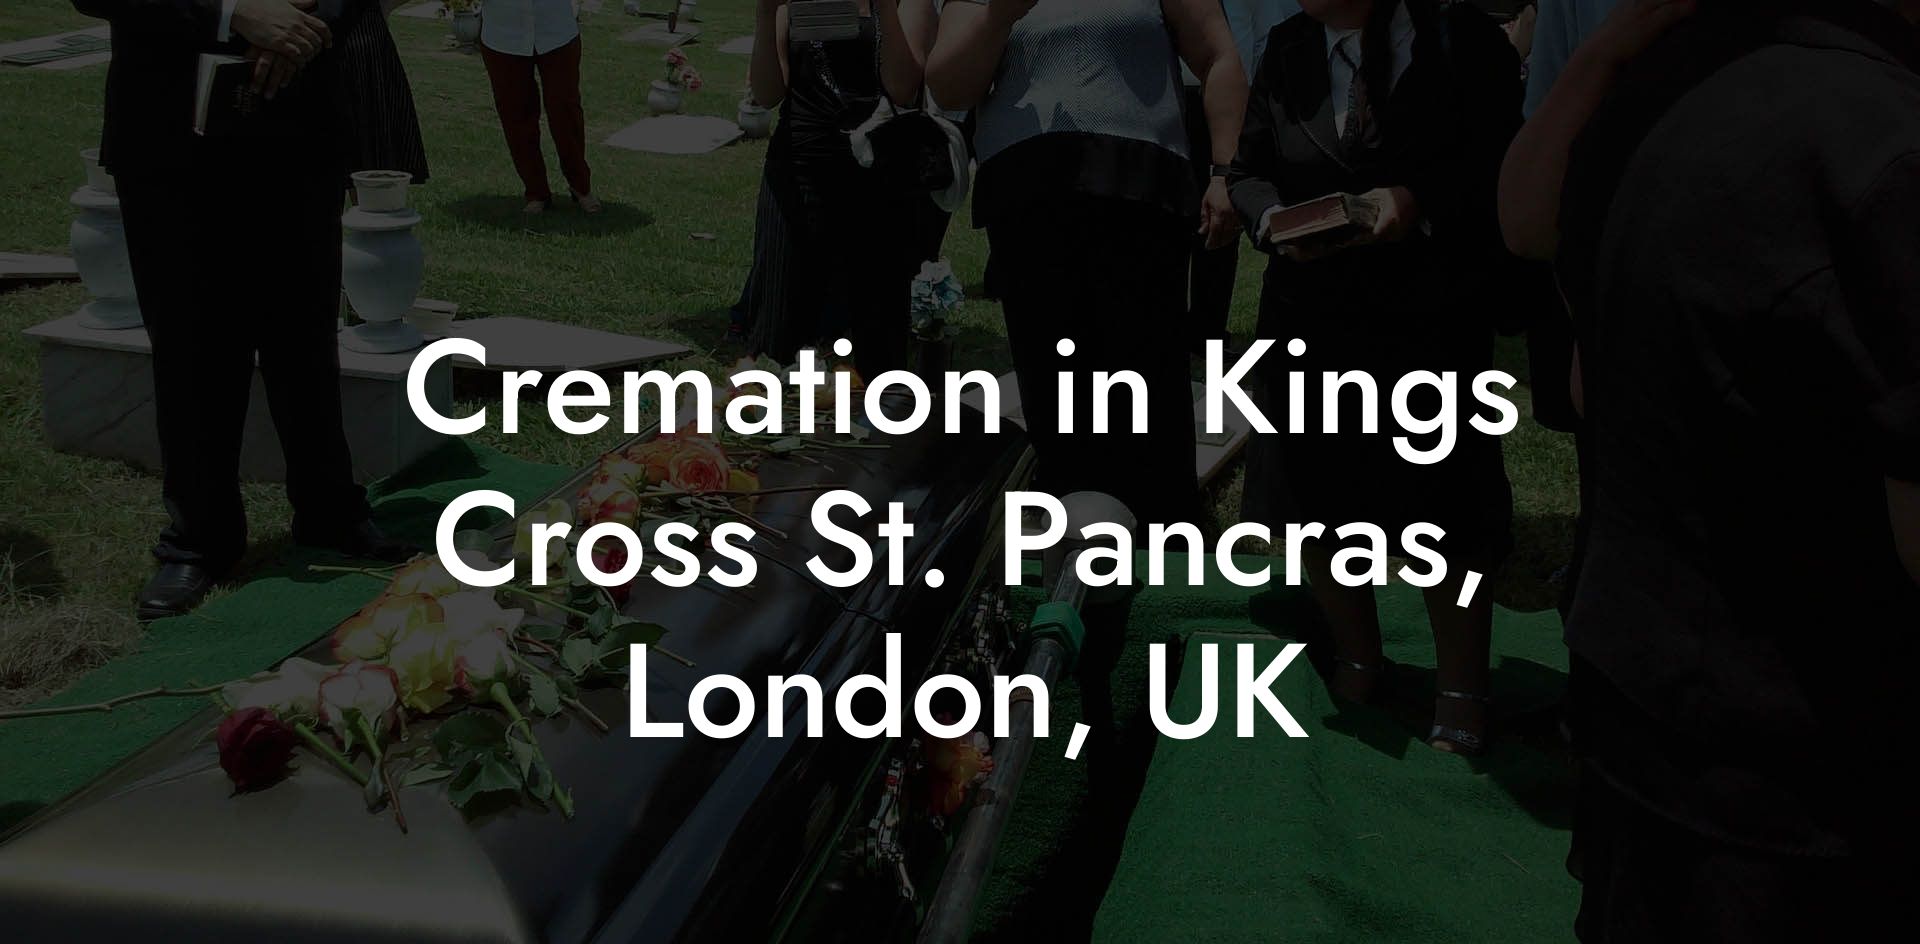 Cremation in Kings Cross St. Pancras, London, UK